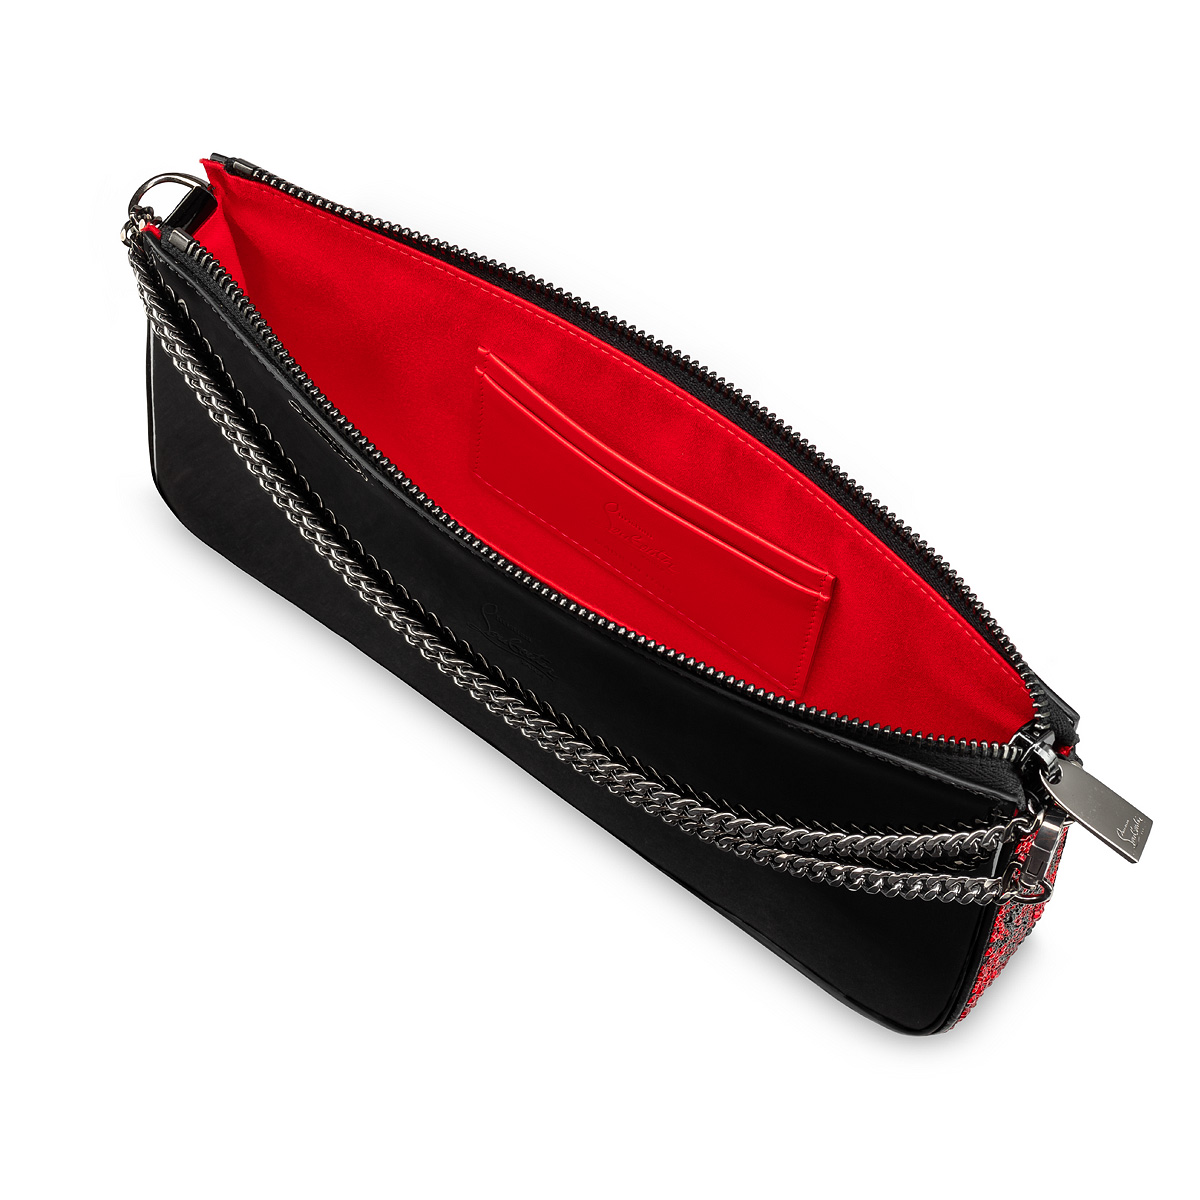 Loubila - Shoulder bag - Calf leather, rubber and spikes - Ole - Christian  Louboutin